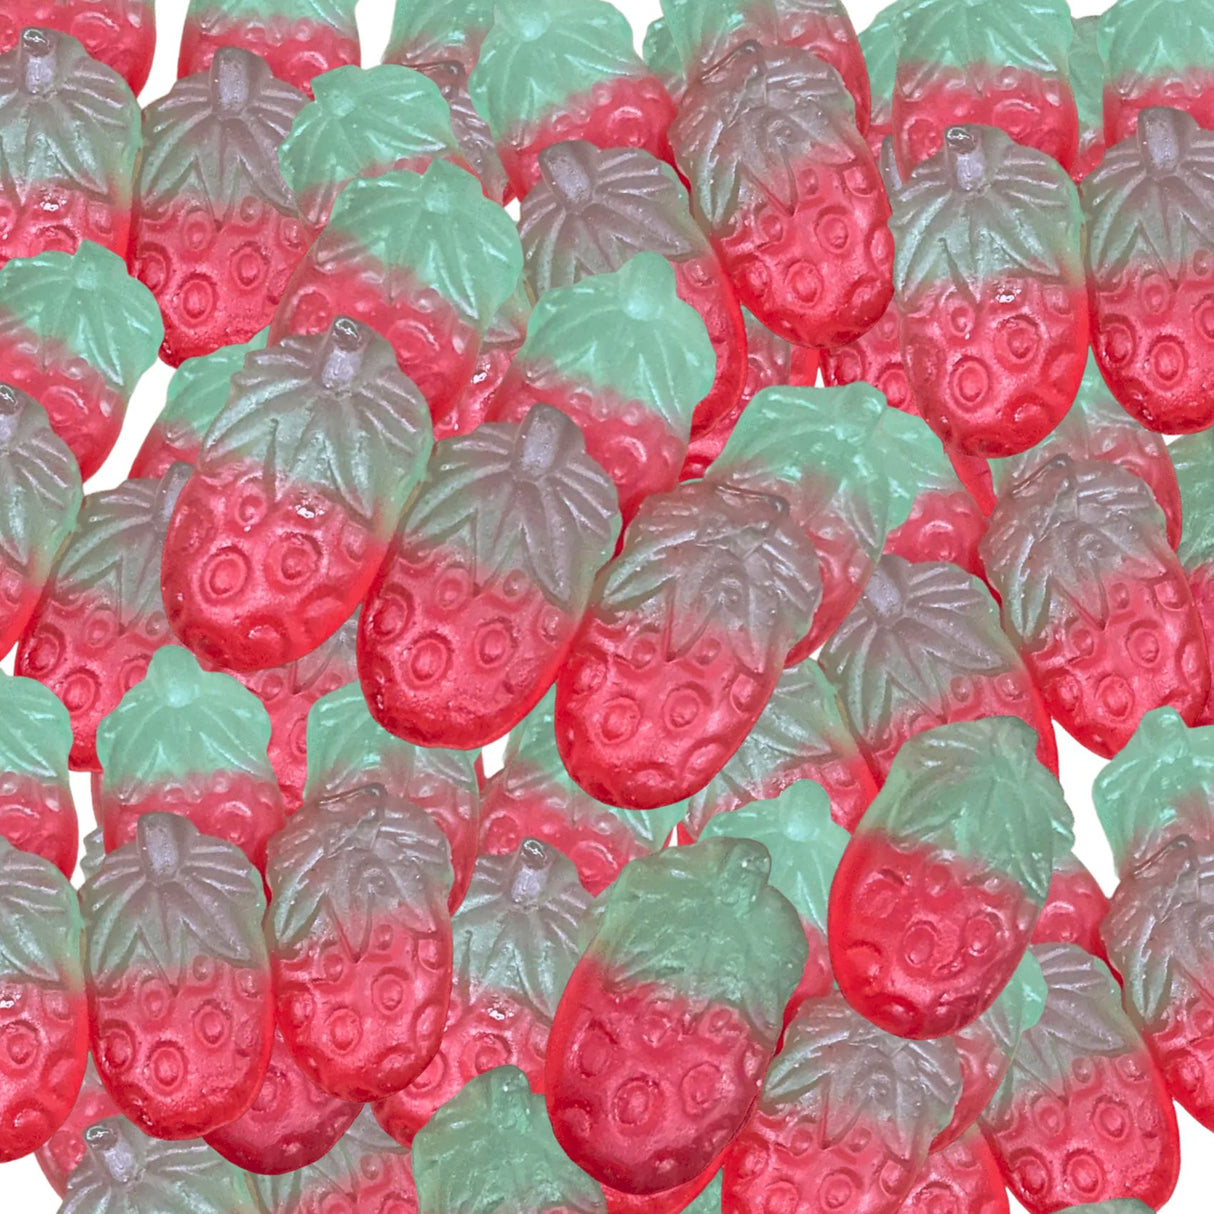 Lovalls sugar free strawberries gummy sweets